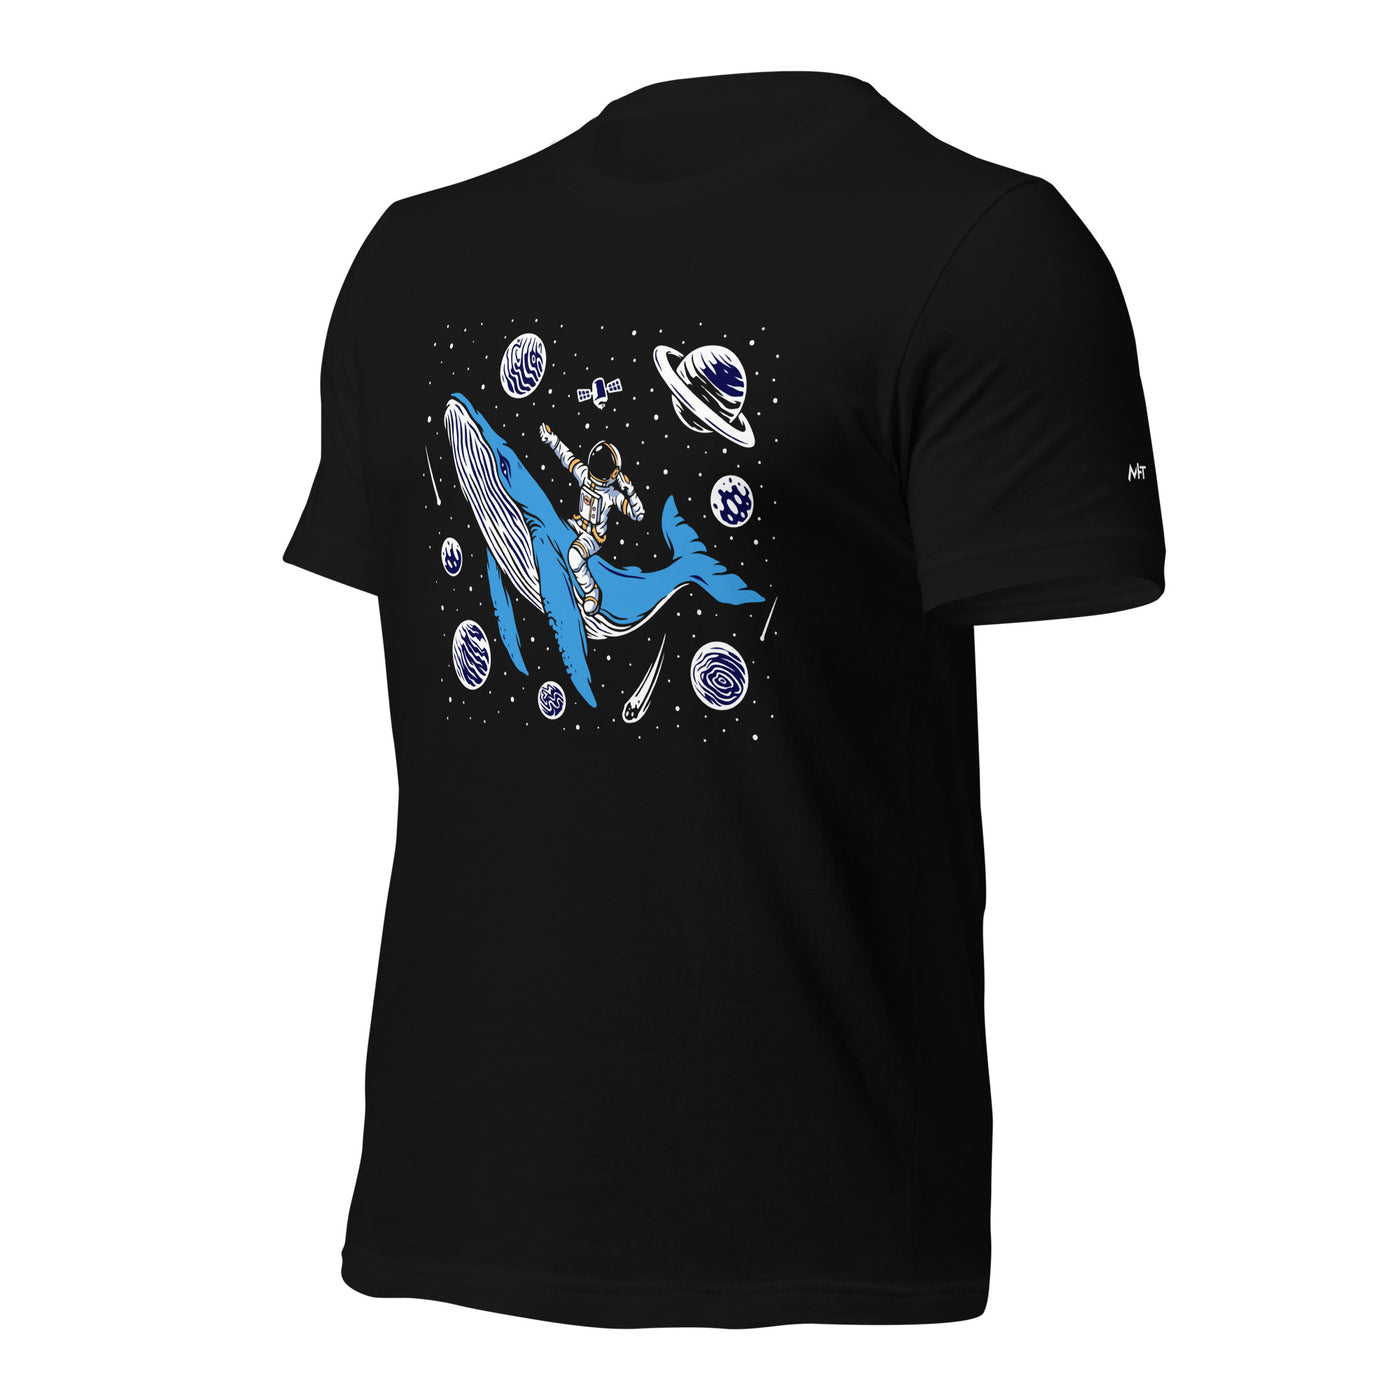 Ride a Whale - Unisex t-shirt